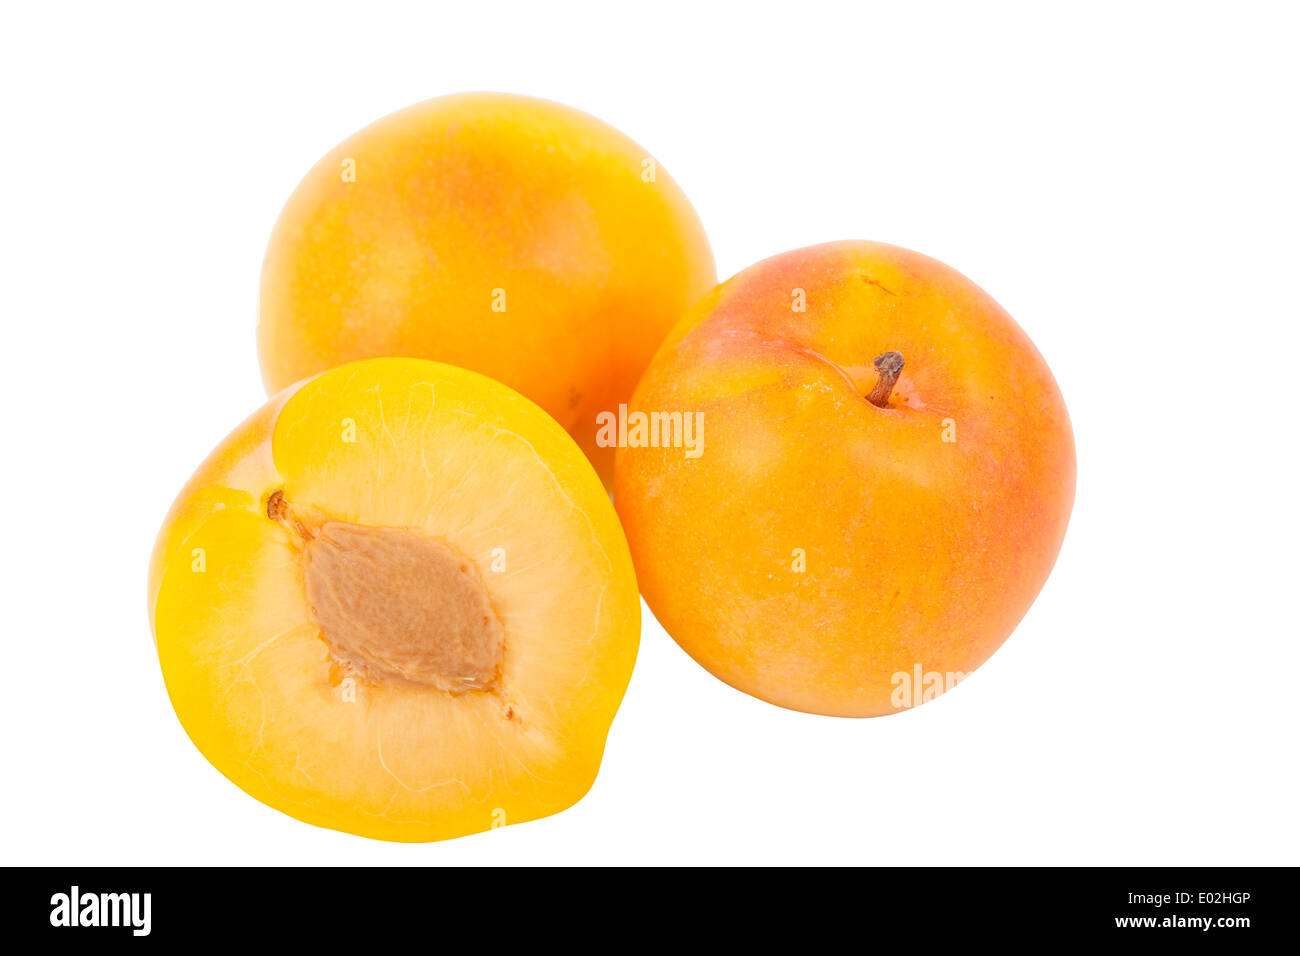 two whole yellow plum on white background Stock Photo